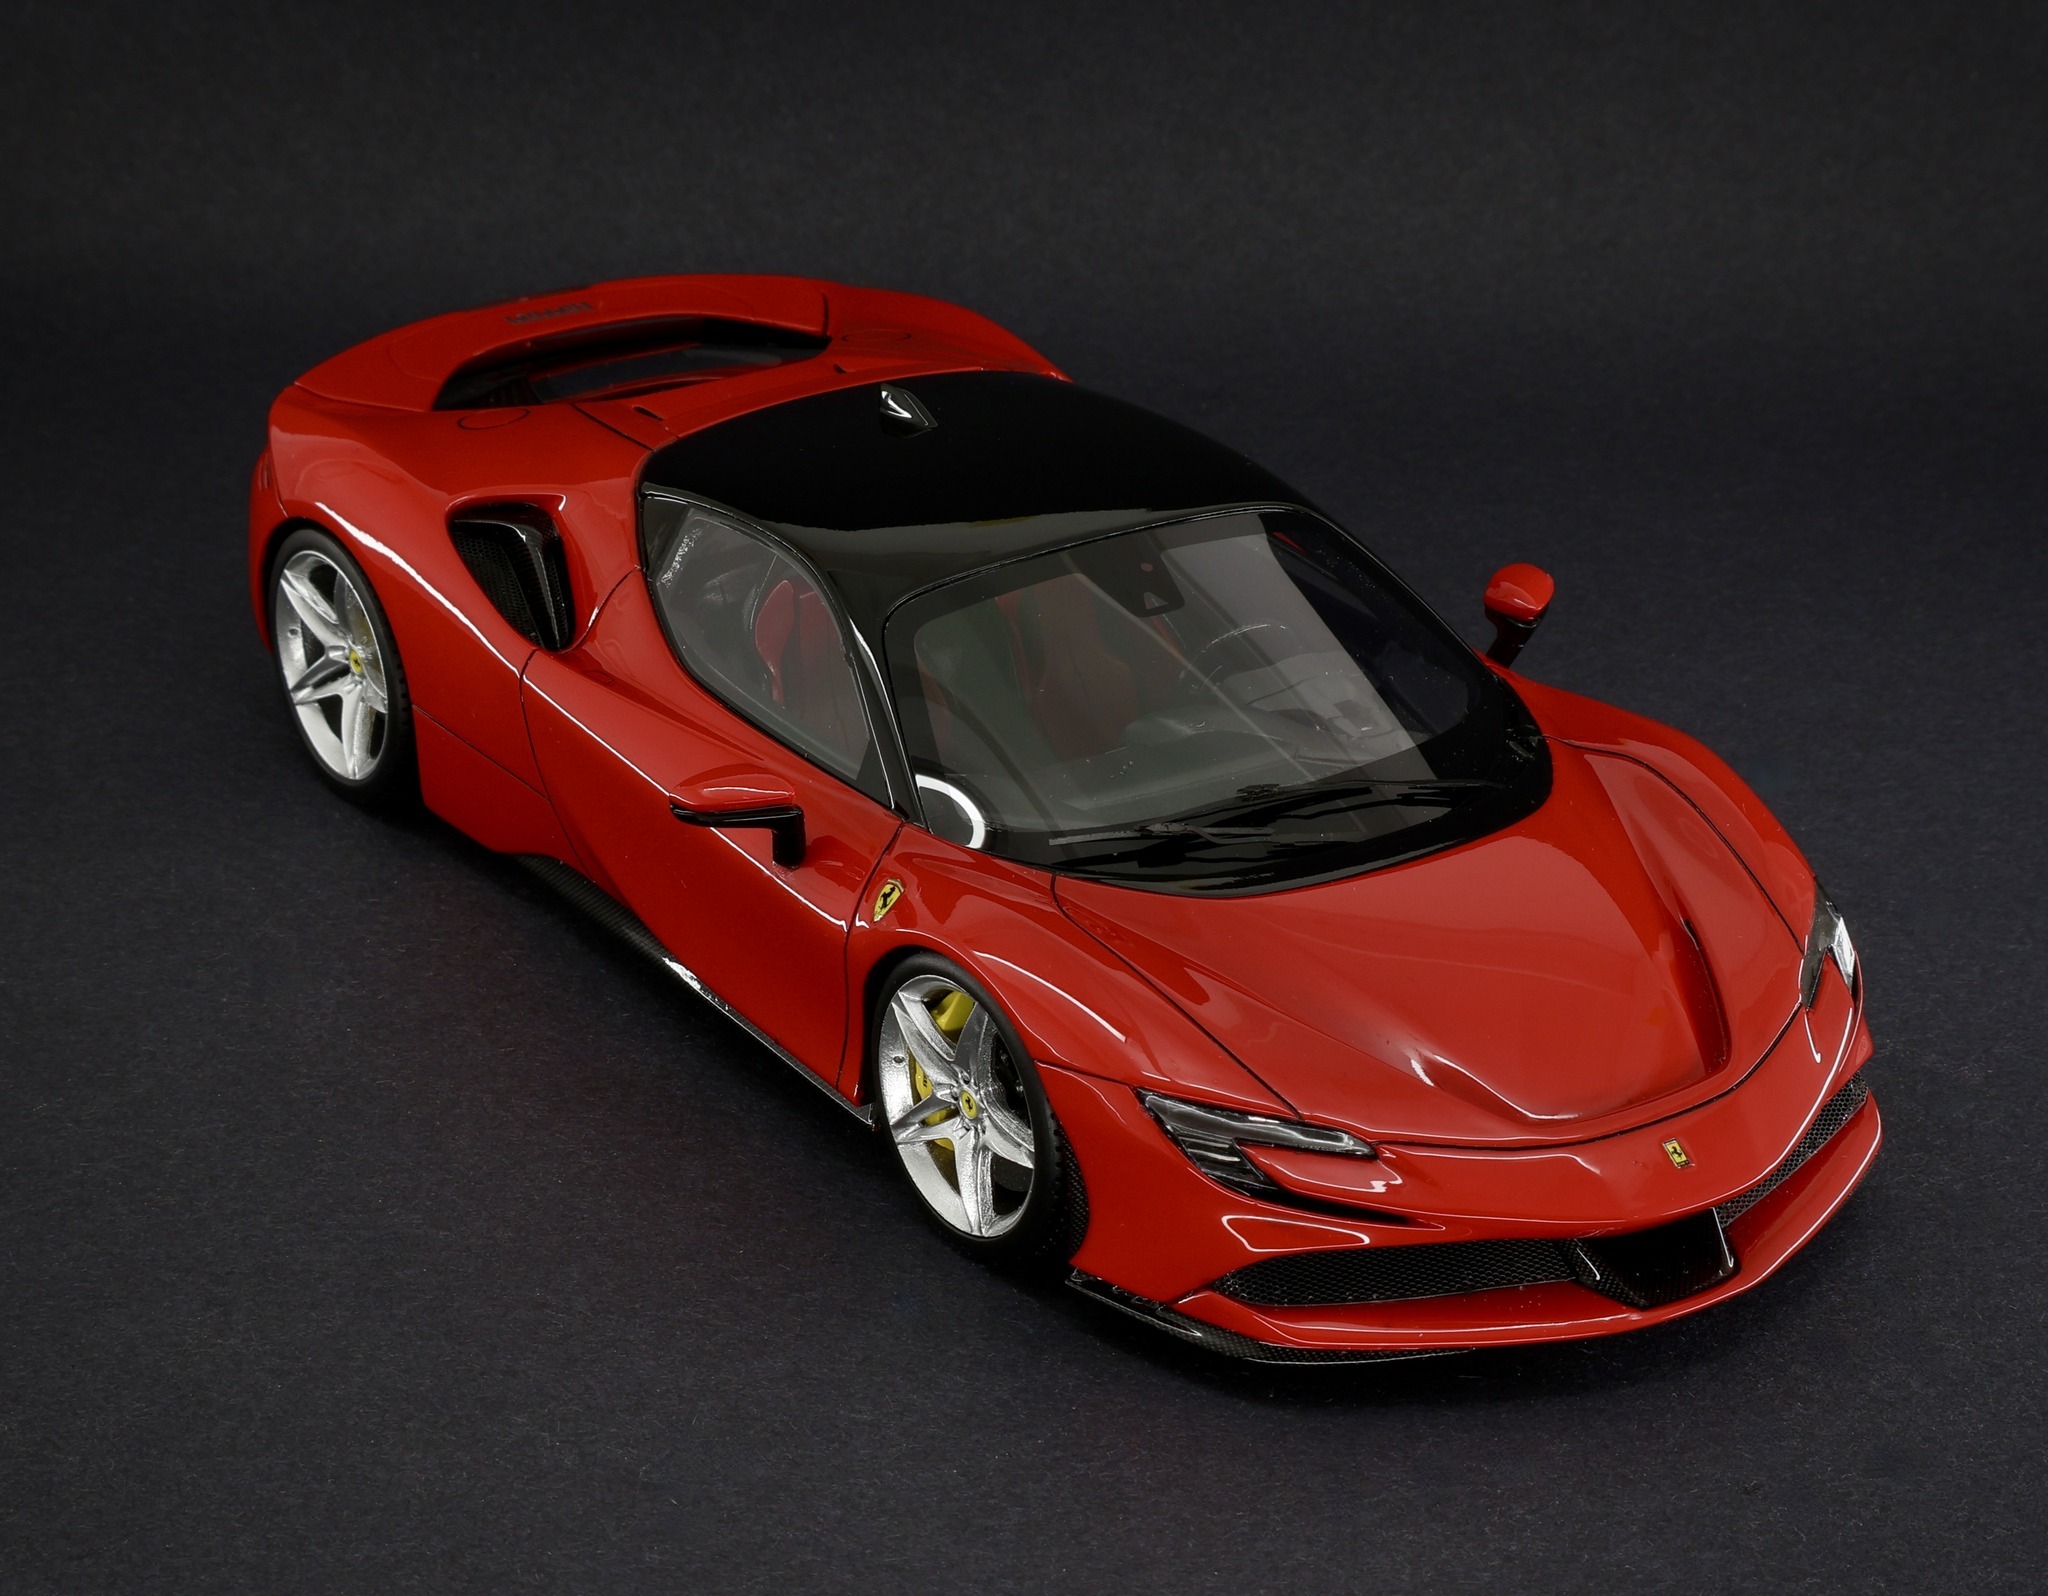 1/24 scale model car kit Ferrari SF90 Stradale-Alpha Model